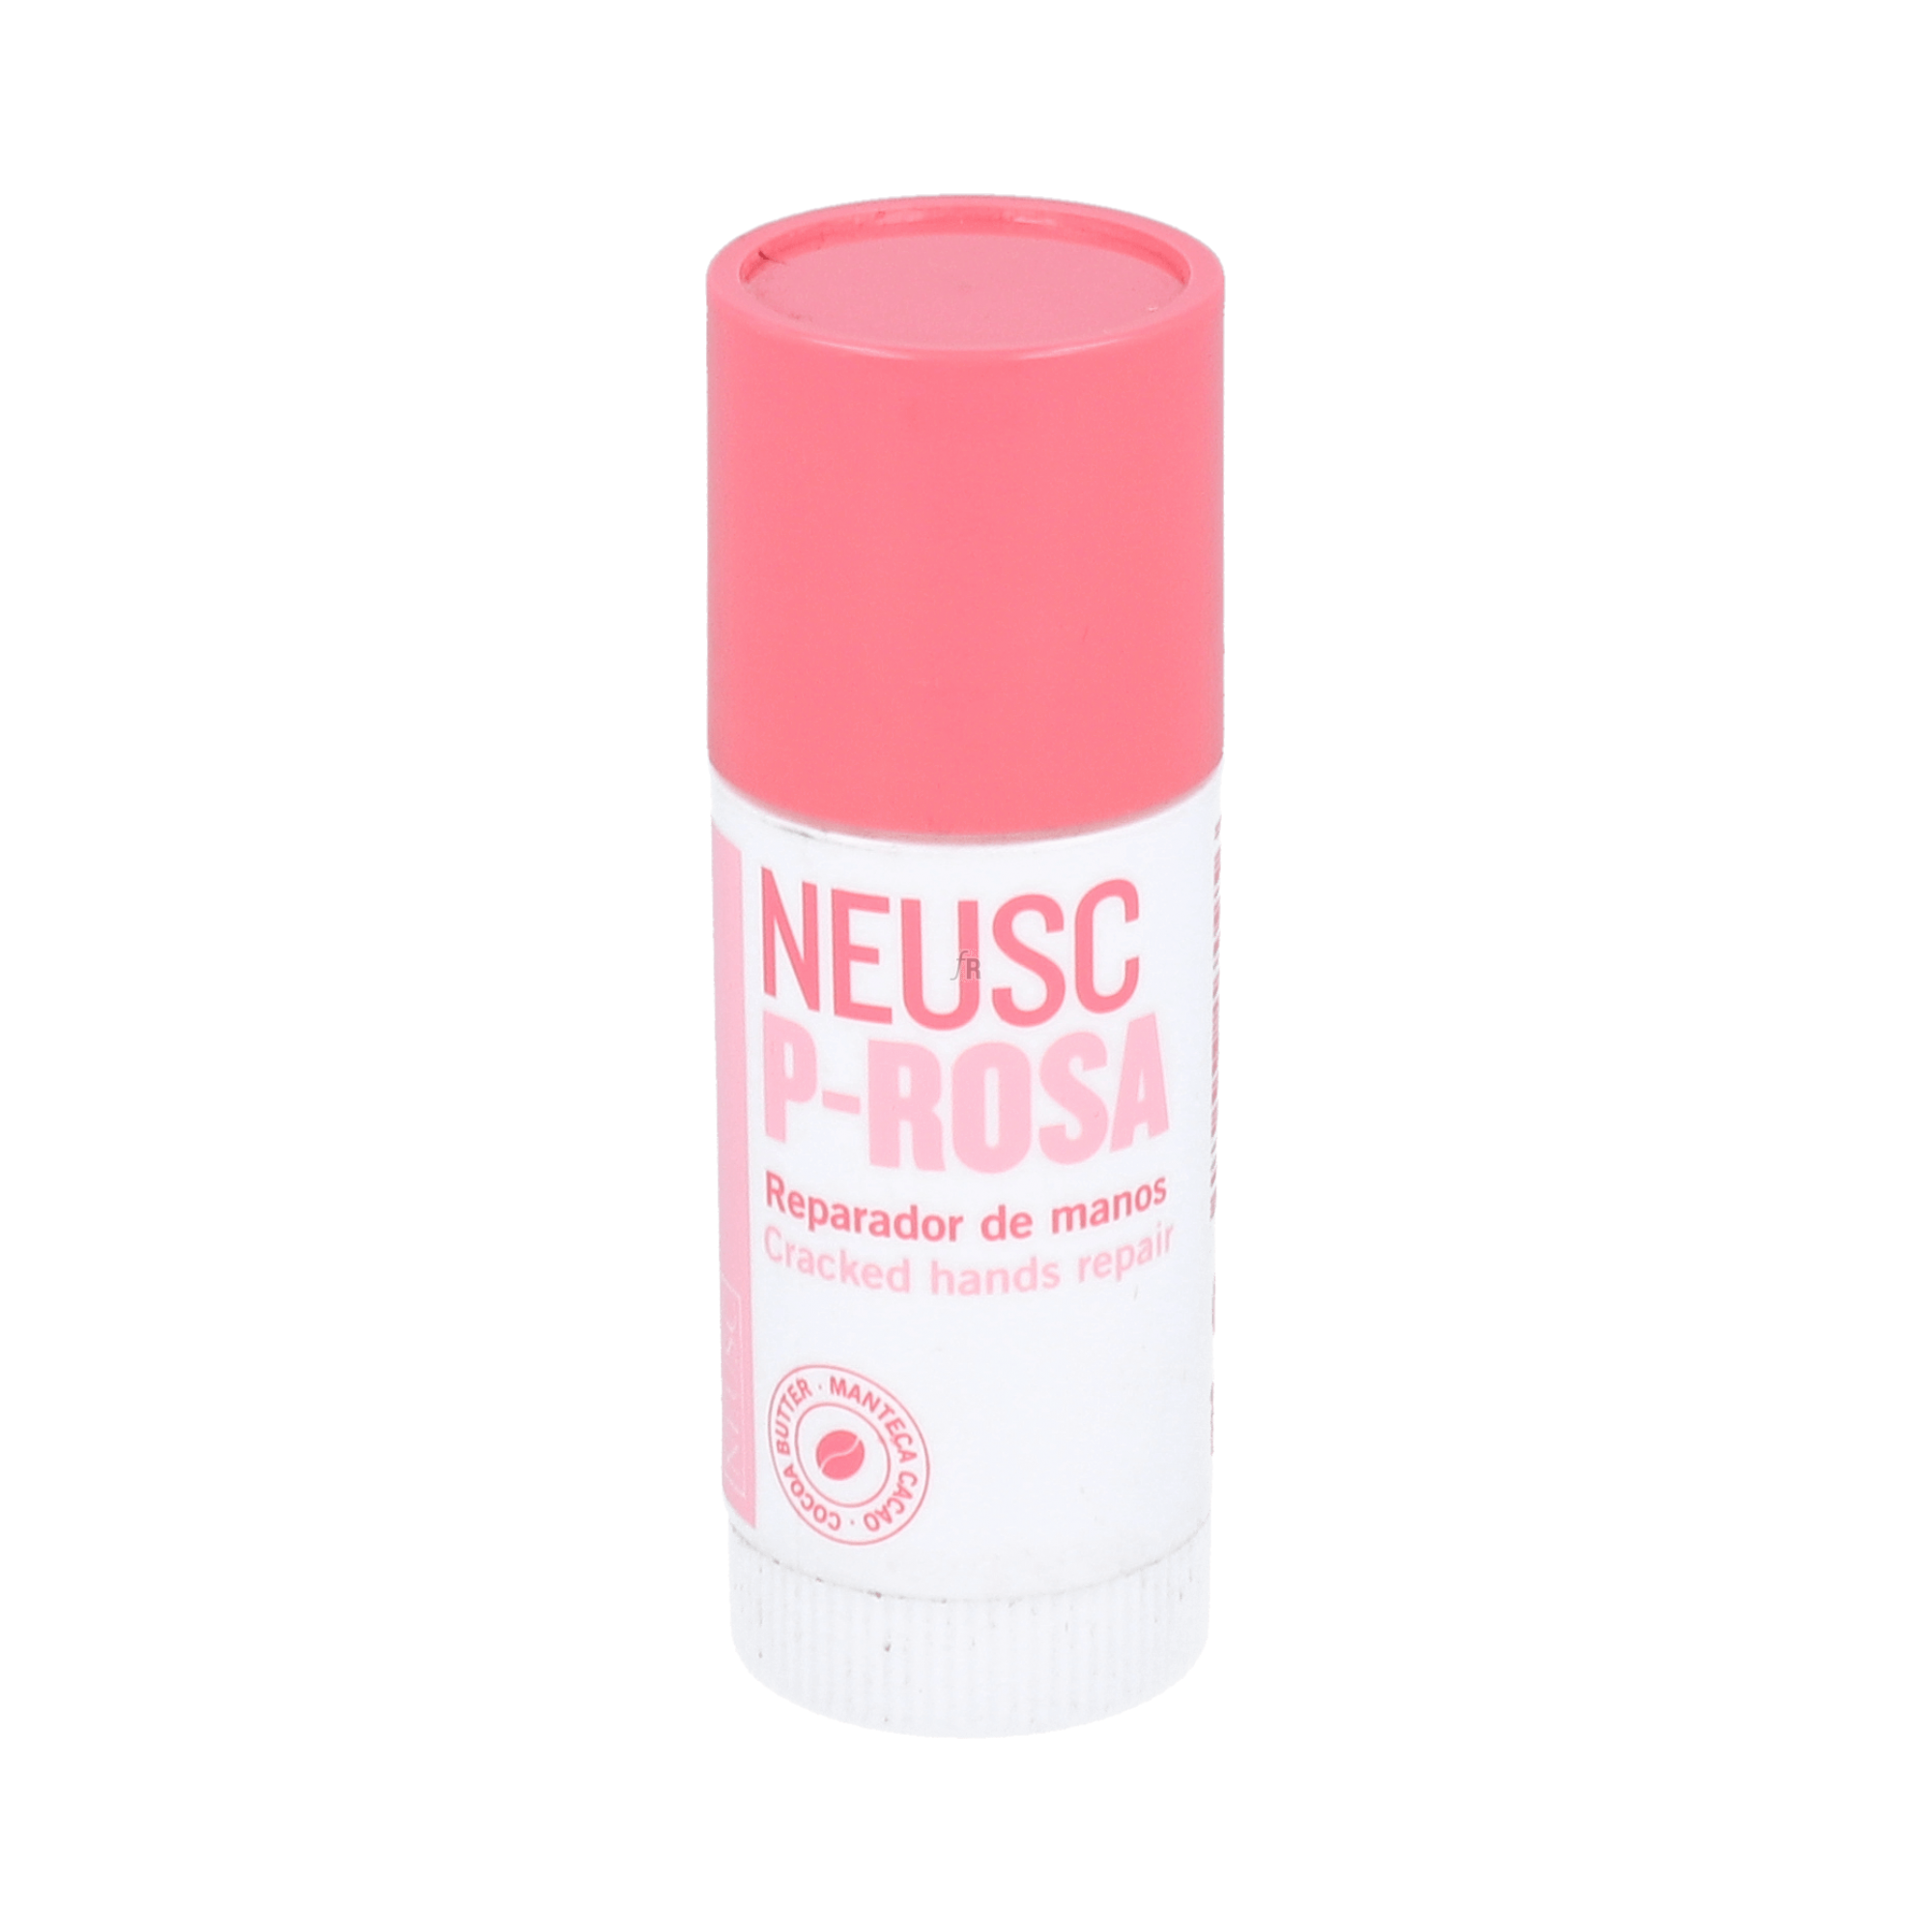 Neusc P-Rosa Stick Dermoprotector 24 G